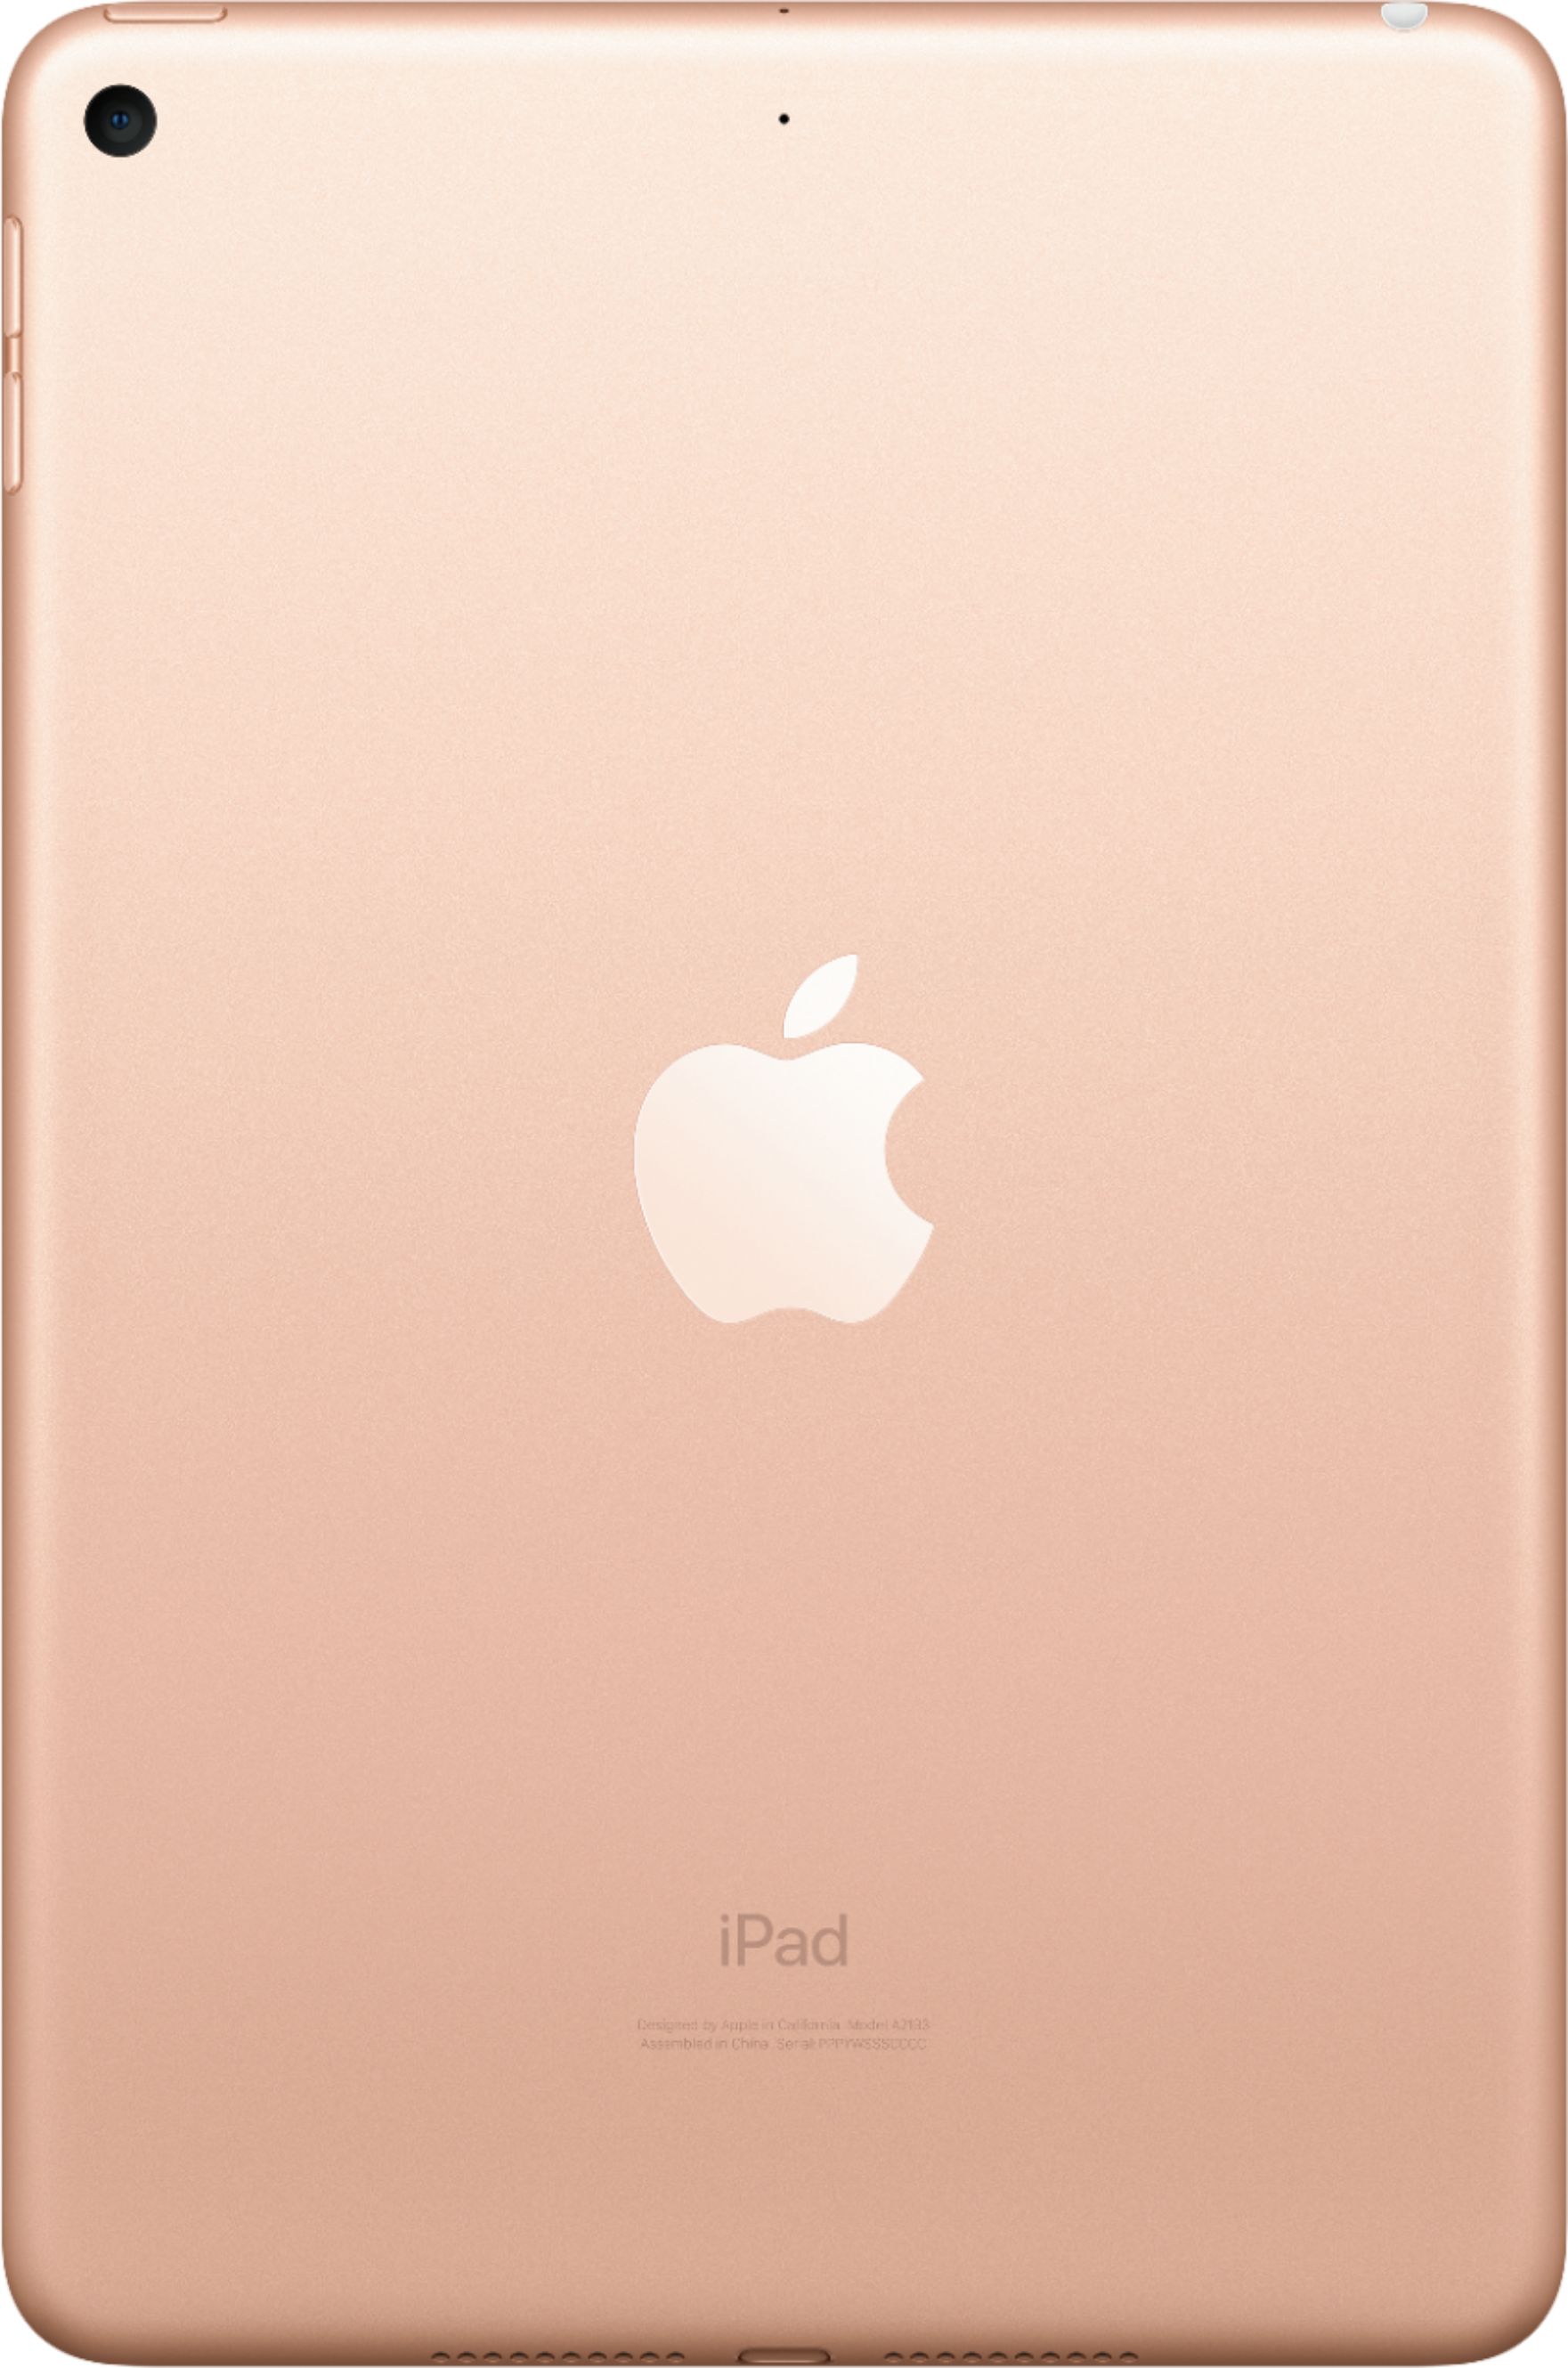 Back View: Apple - 7.9-Inch iPad mini (5th Generation) with Wi-Fi - 256GB - Gold